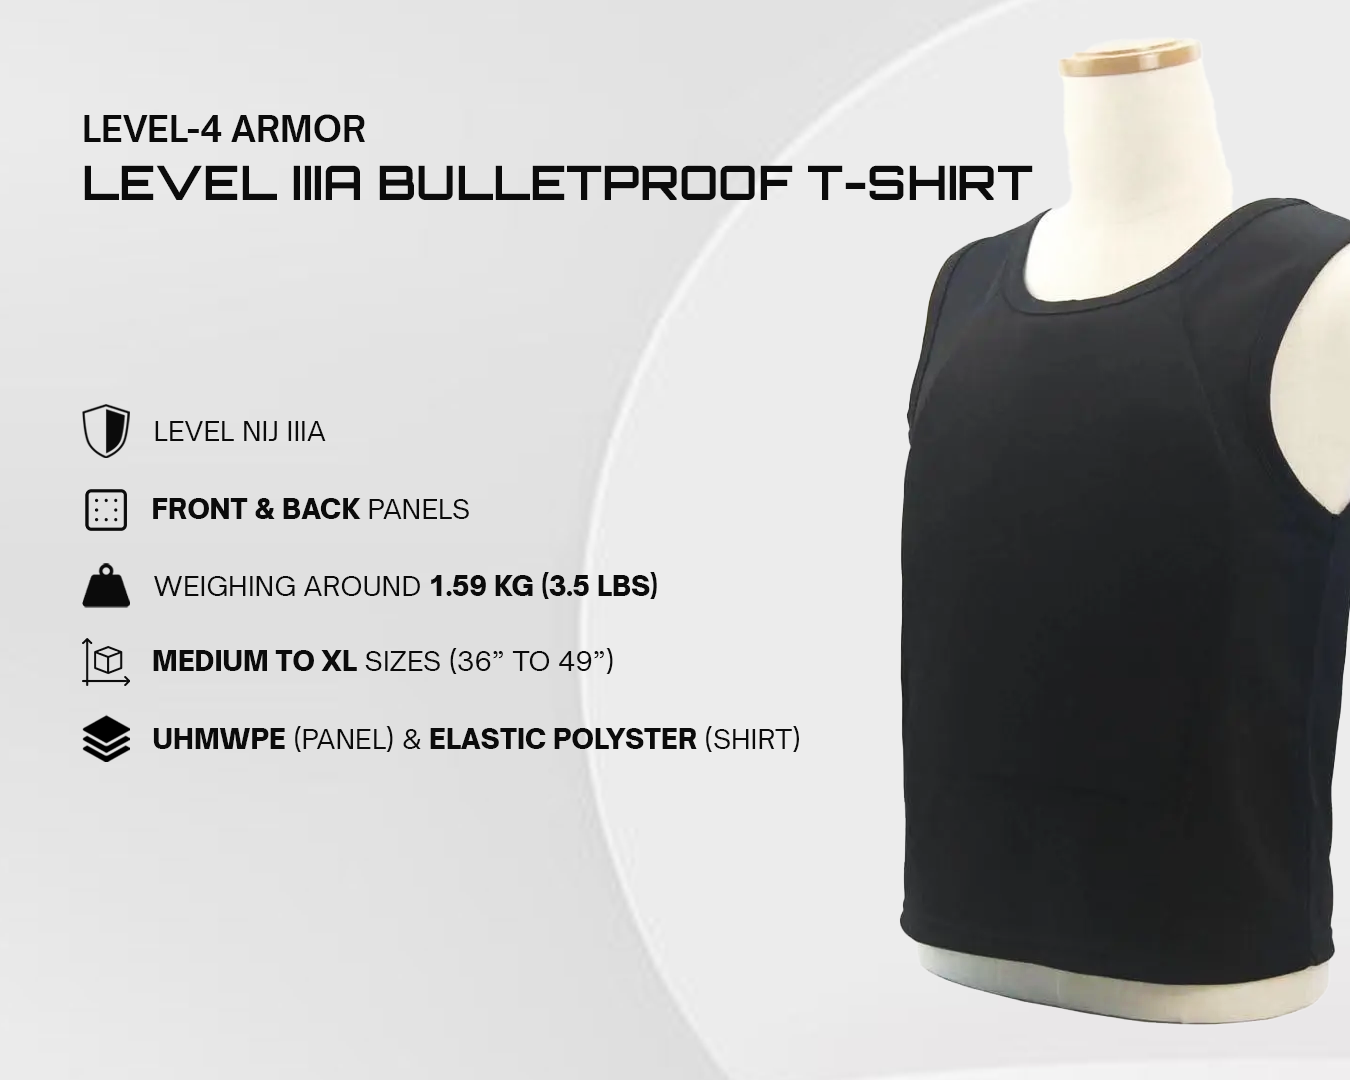 Level-4 Armor Level IIIA Bulletproof T-shirt's features and benifits